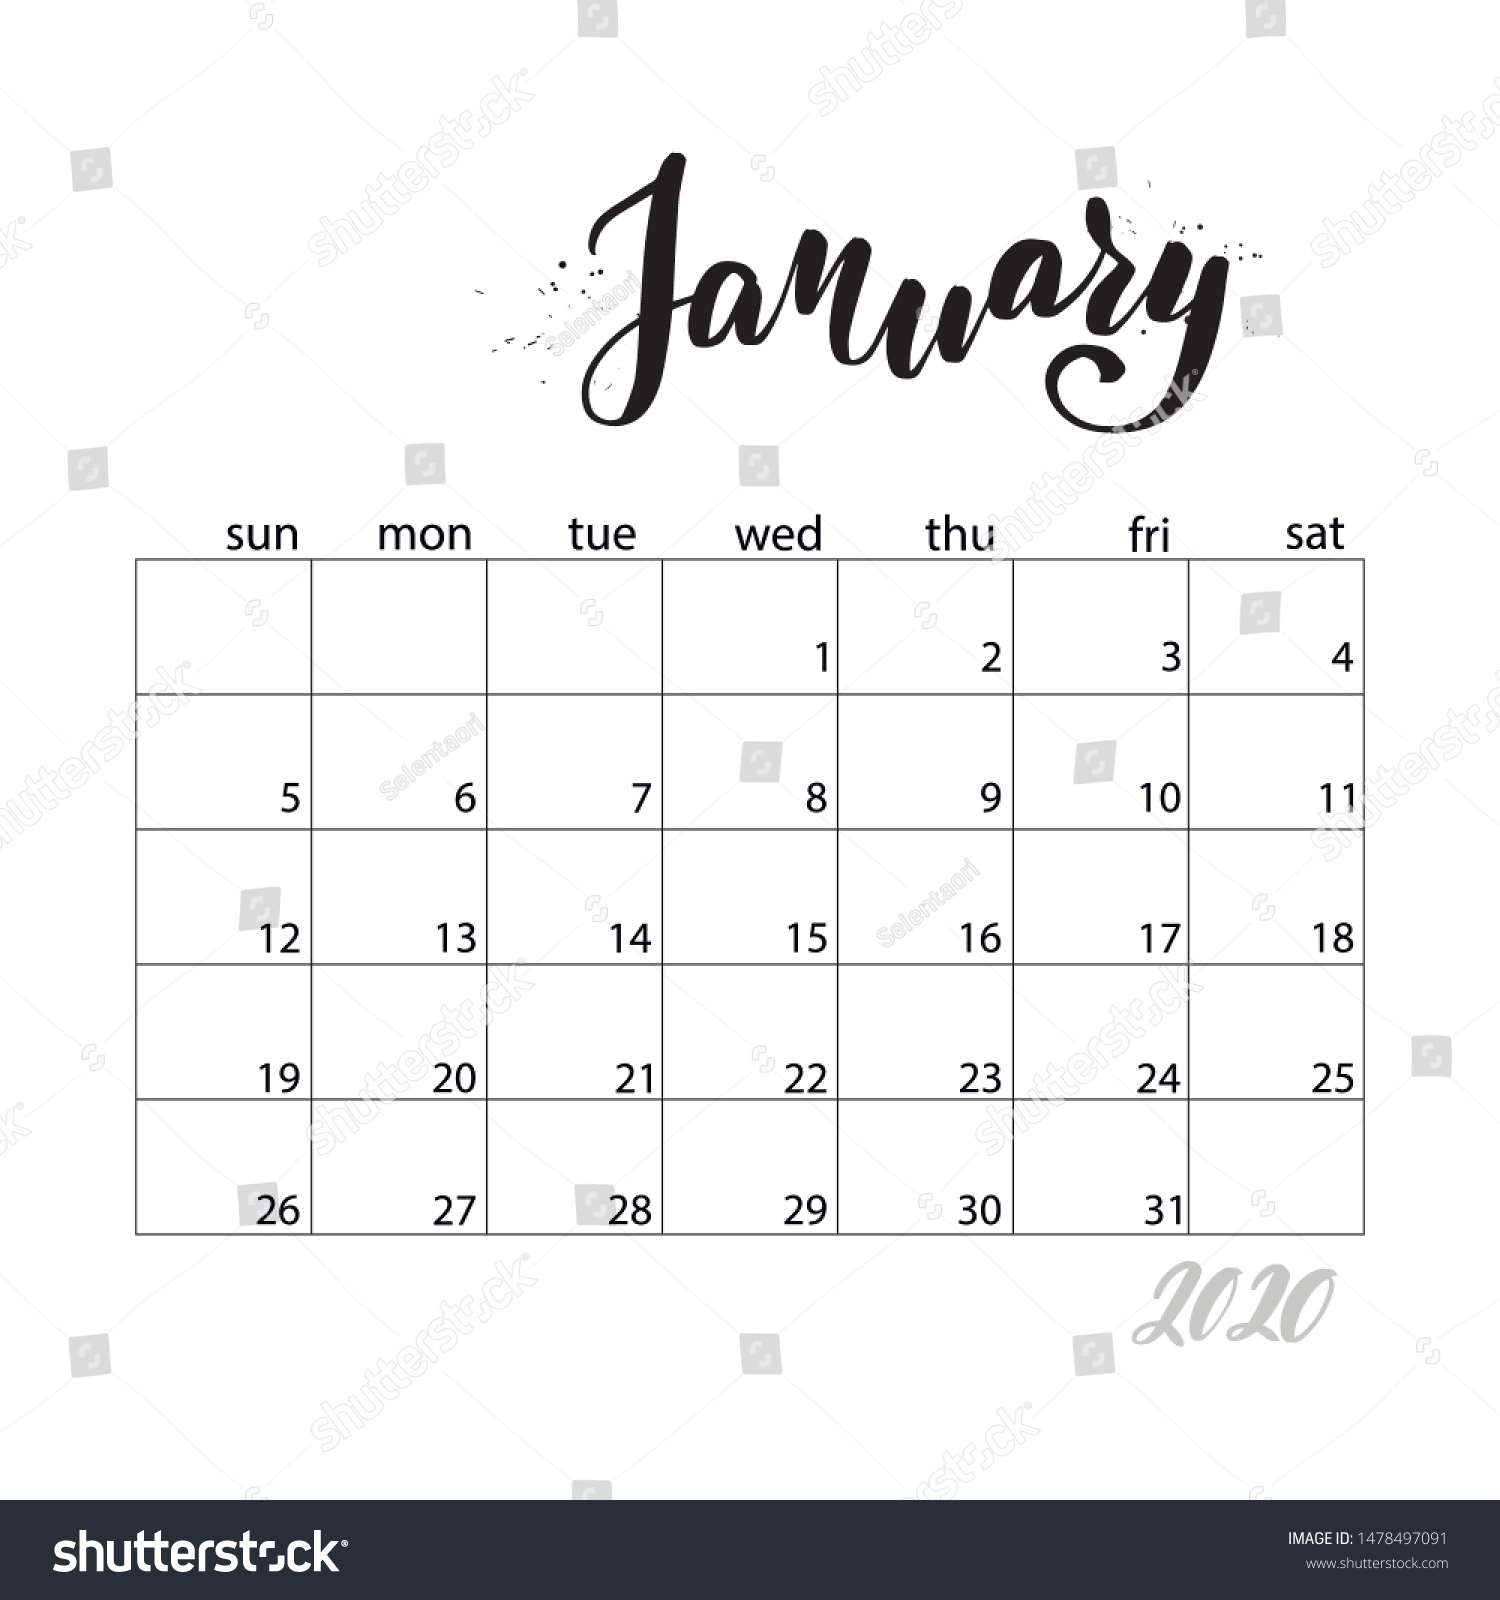 January Monthly Calendar 2020 Year Handwritten Stock Vector (Royalty ...